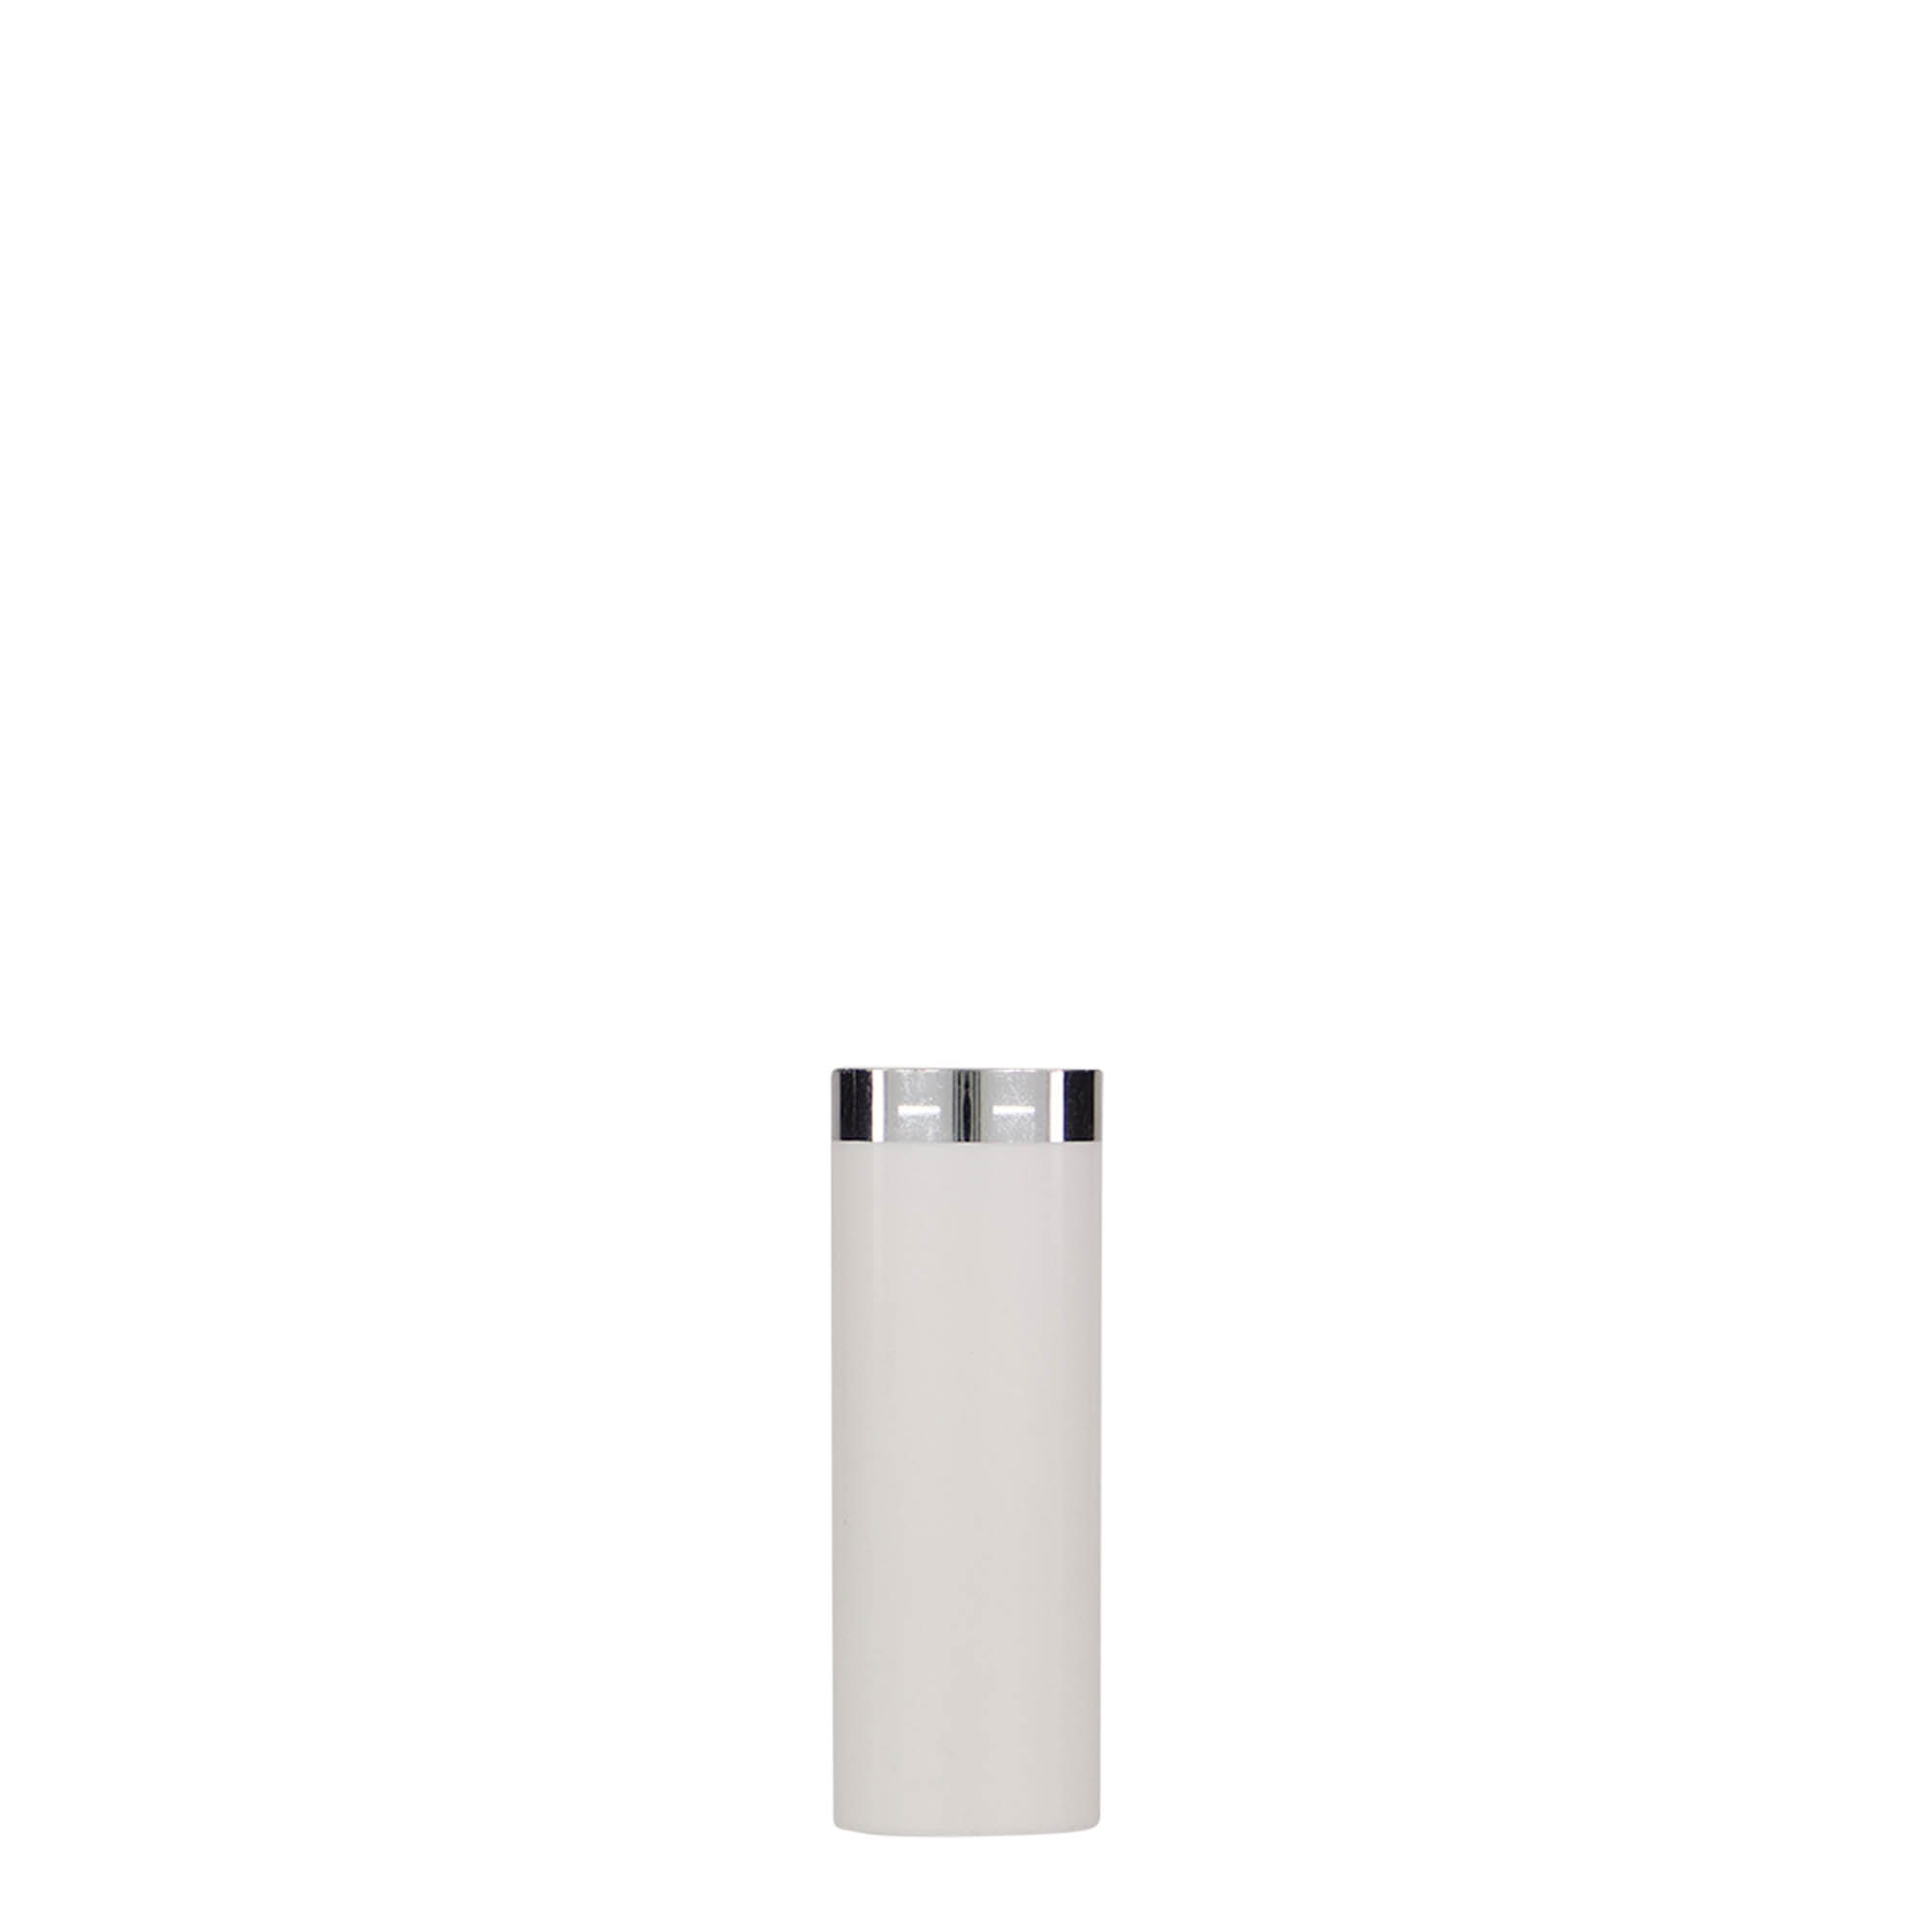 Flacon airless 10 ml 'Nano', plastique PP, blanc